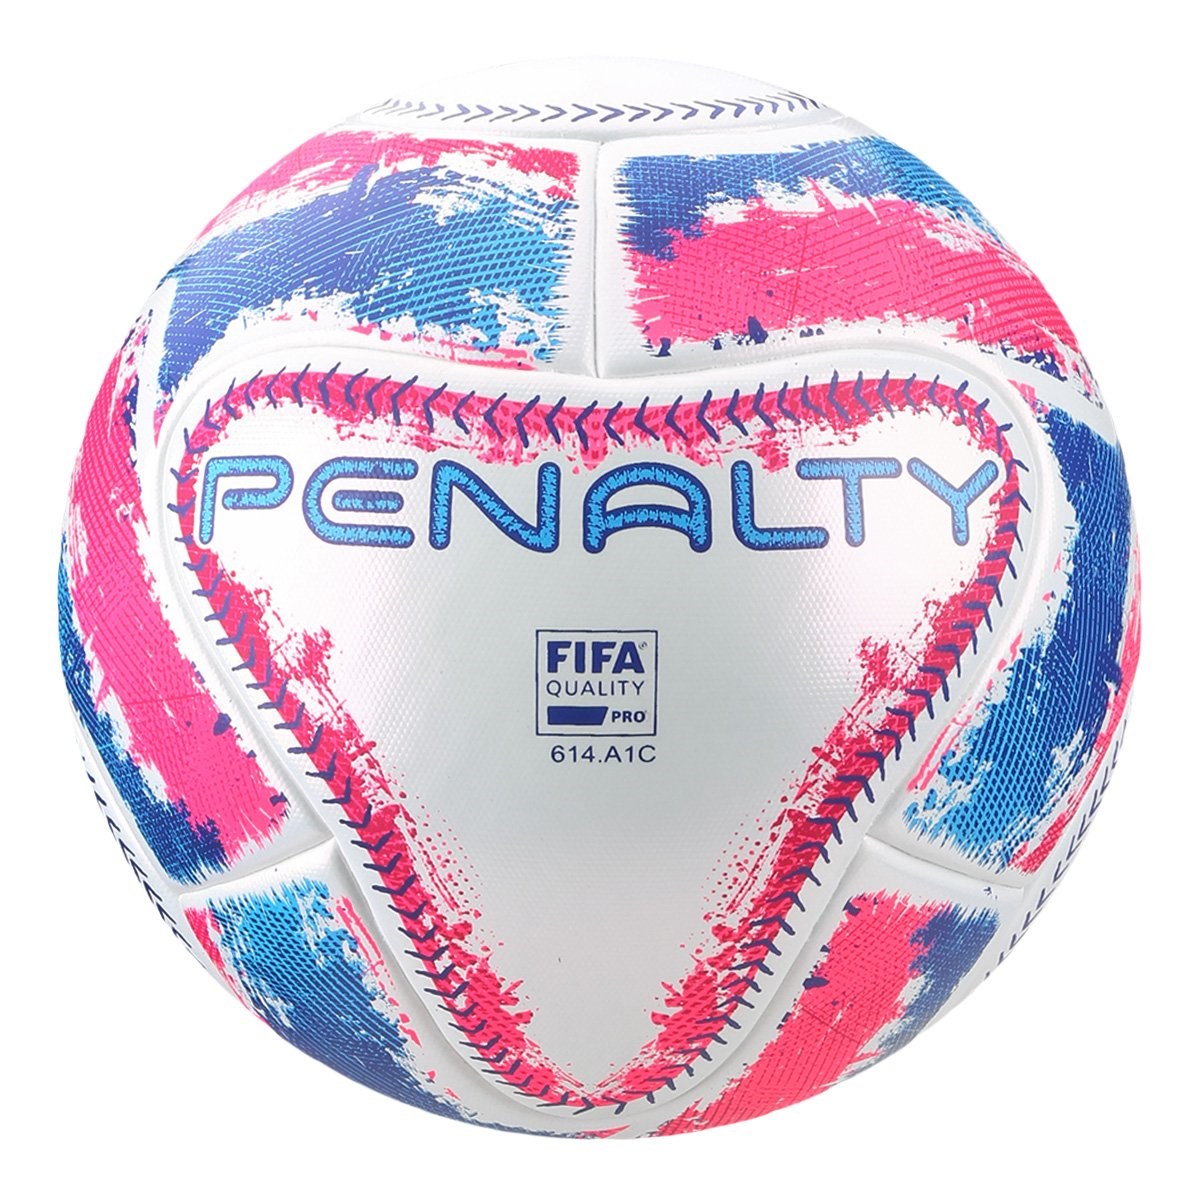 Bola Penalty Futsal Max 1000 V - Compre Agora